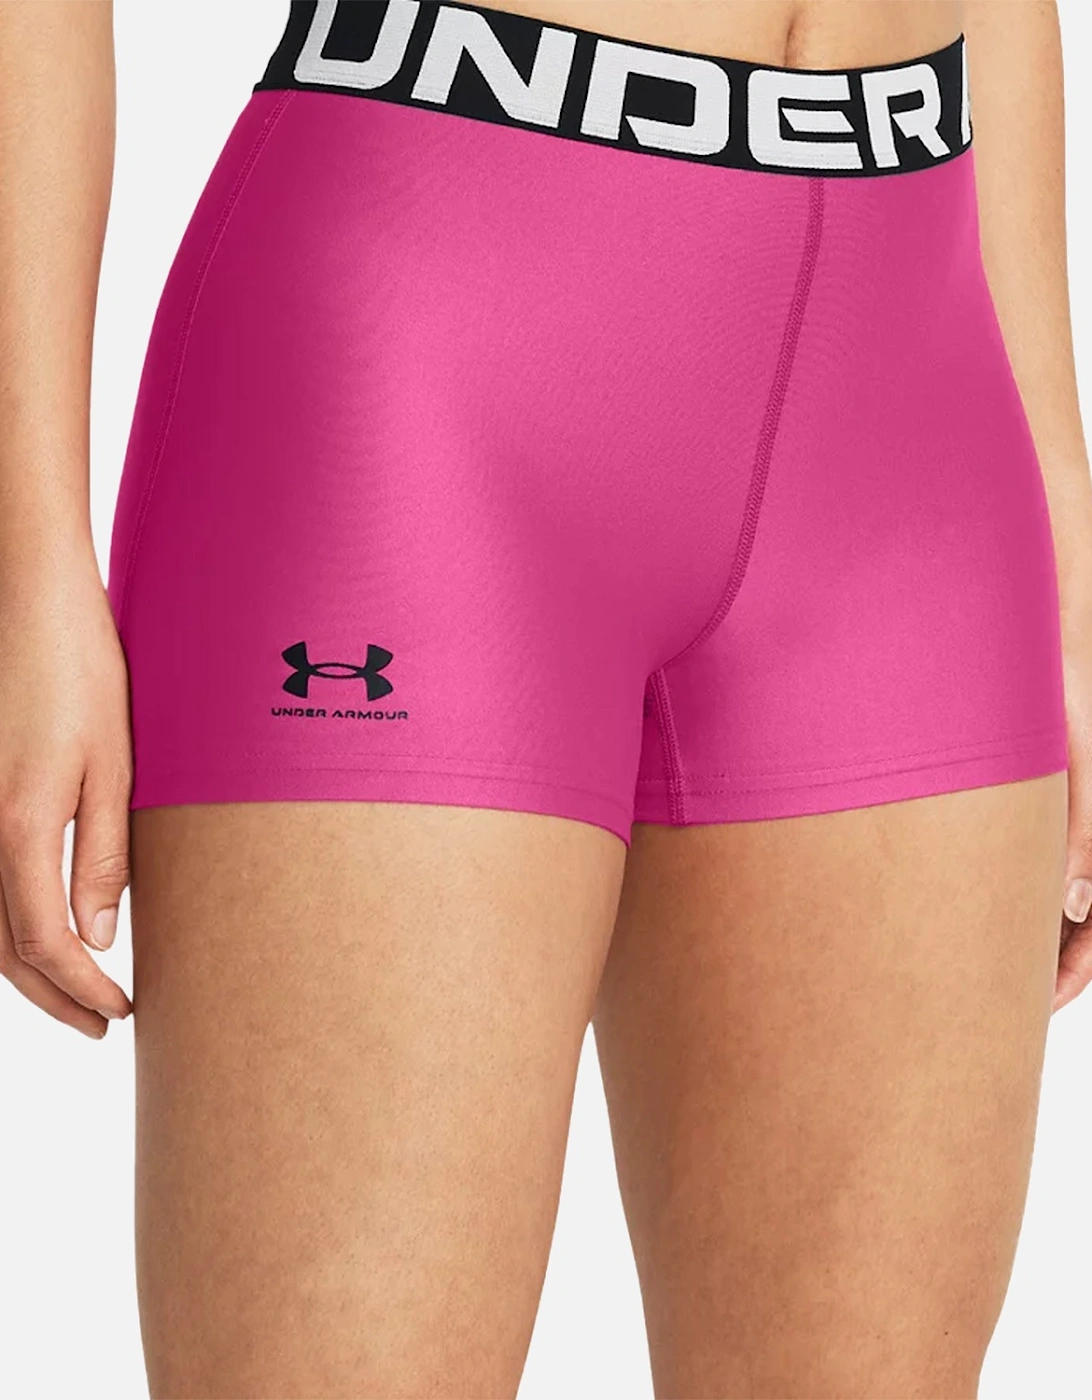 Womens Heat Gear Shorts (Dark Pink)